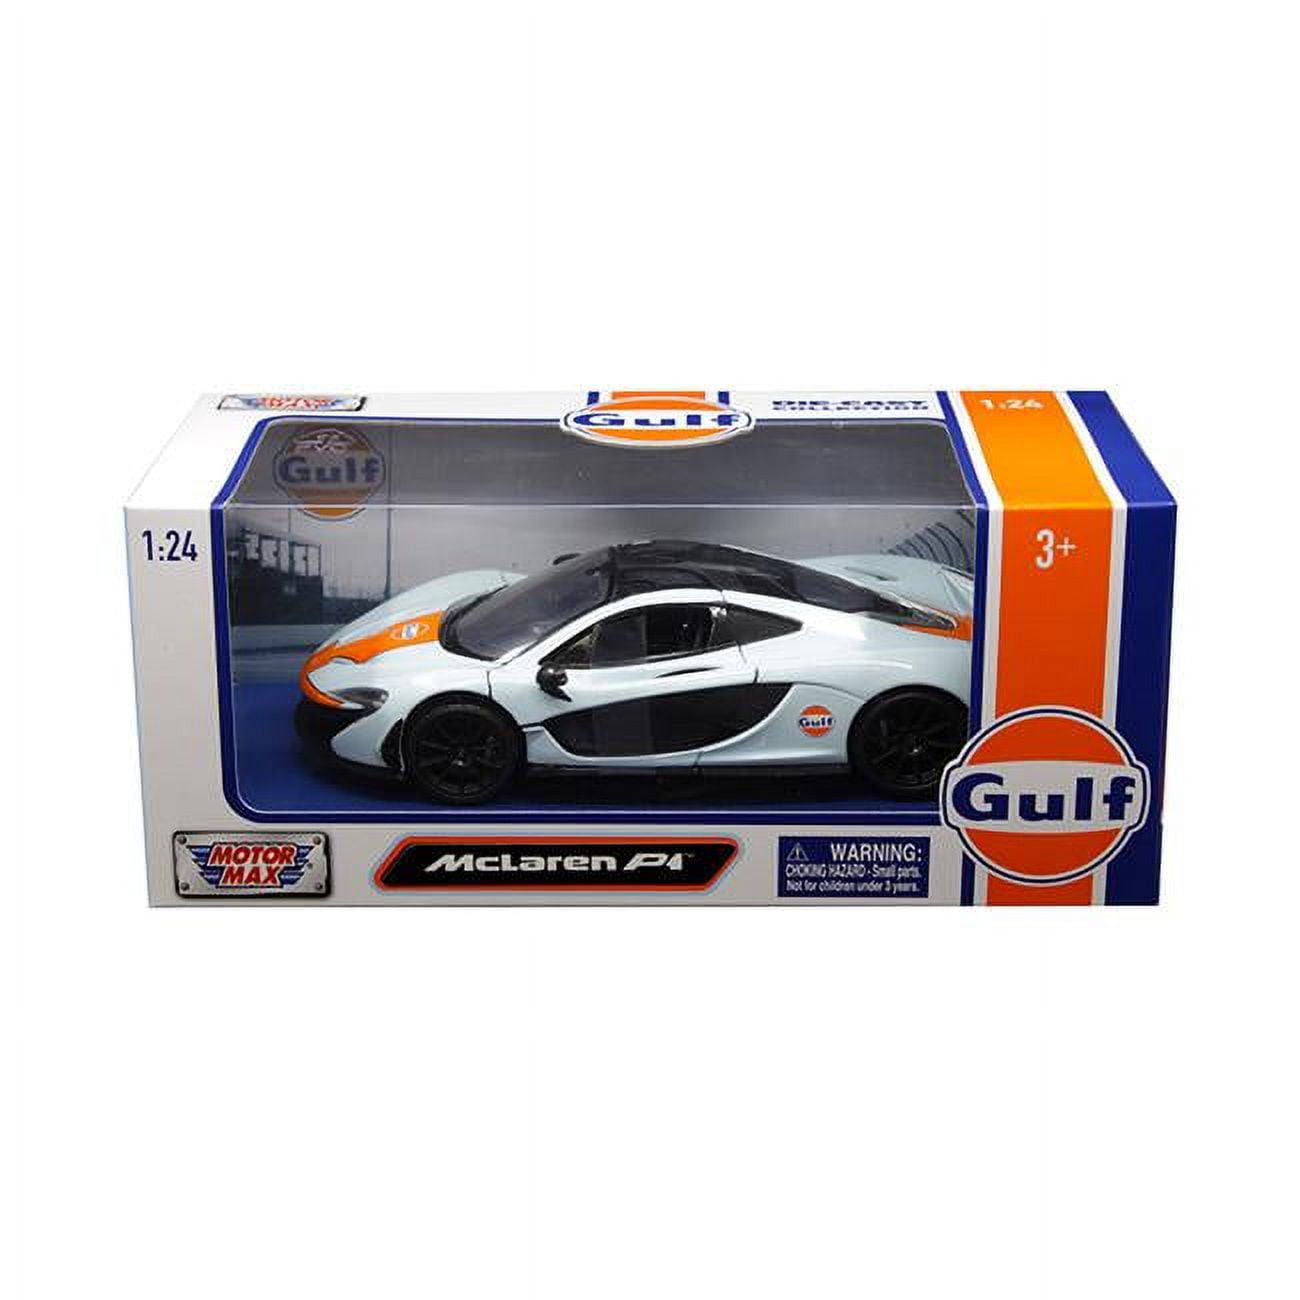 79642 1-24 Mclaren P1 With Gulf Livery Diecast Model Car - Light Blue With Orange Stripe